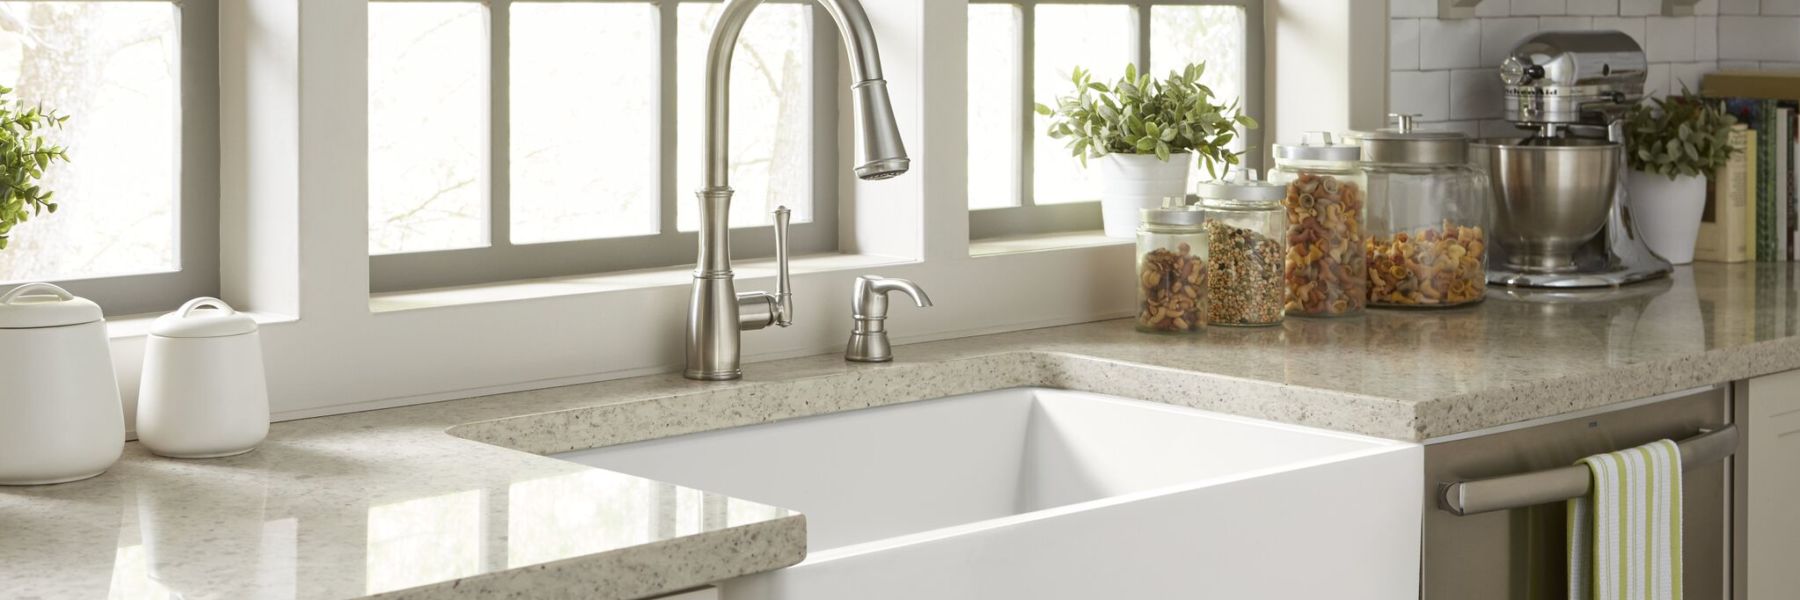 different types of kitchen sink materials